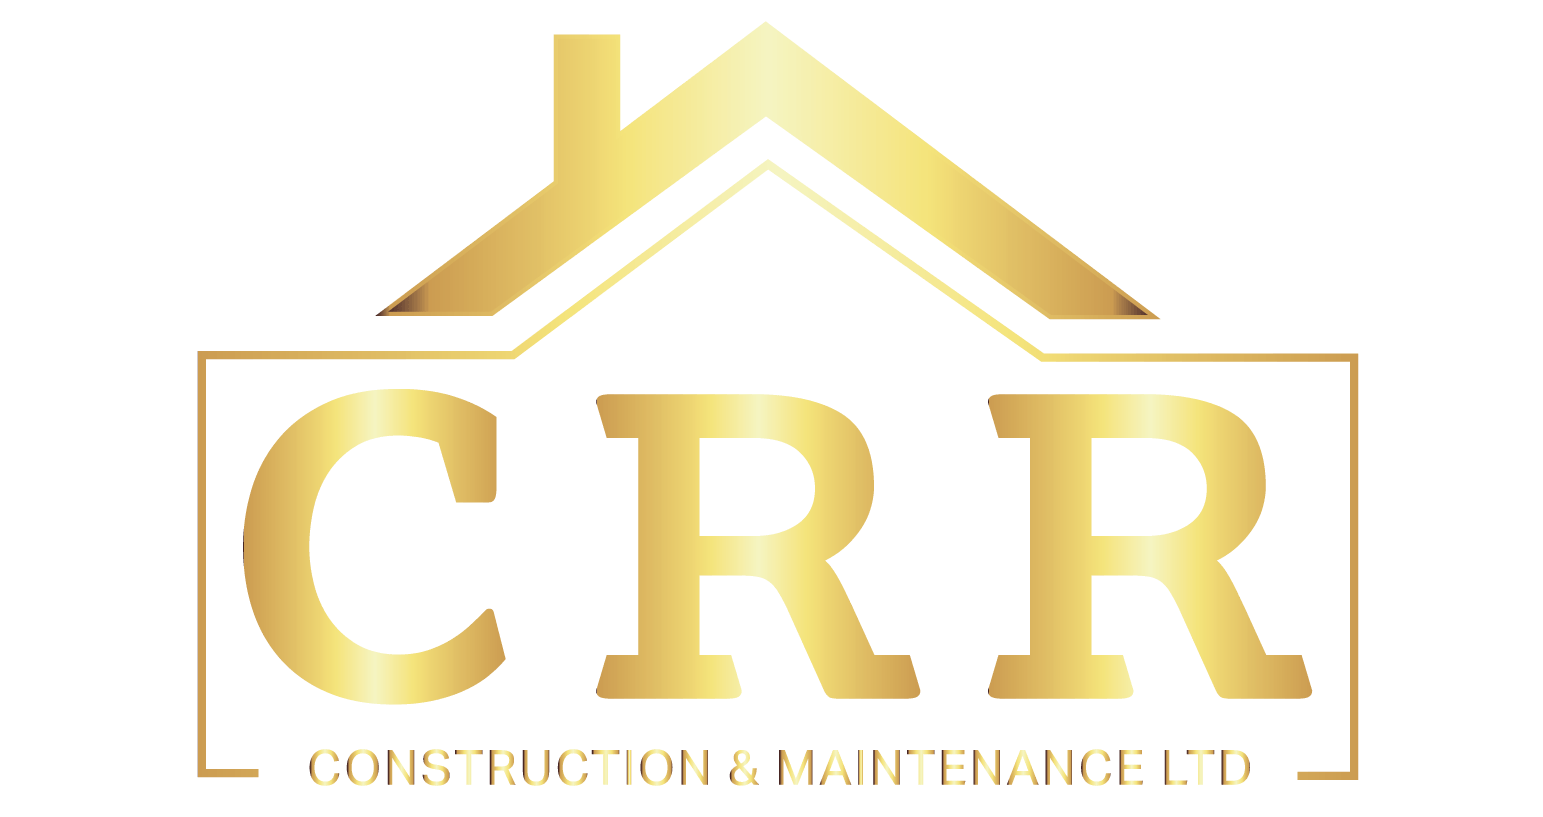 CRR logo